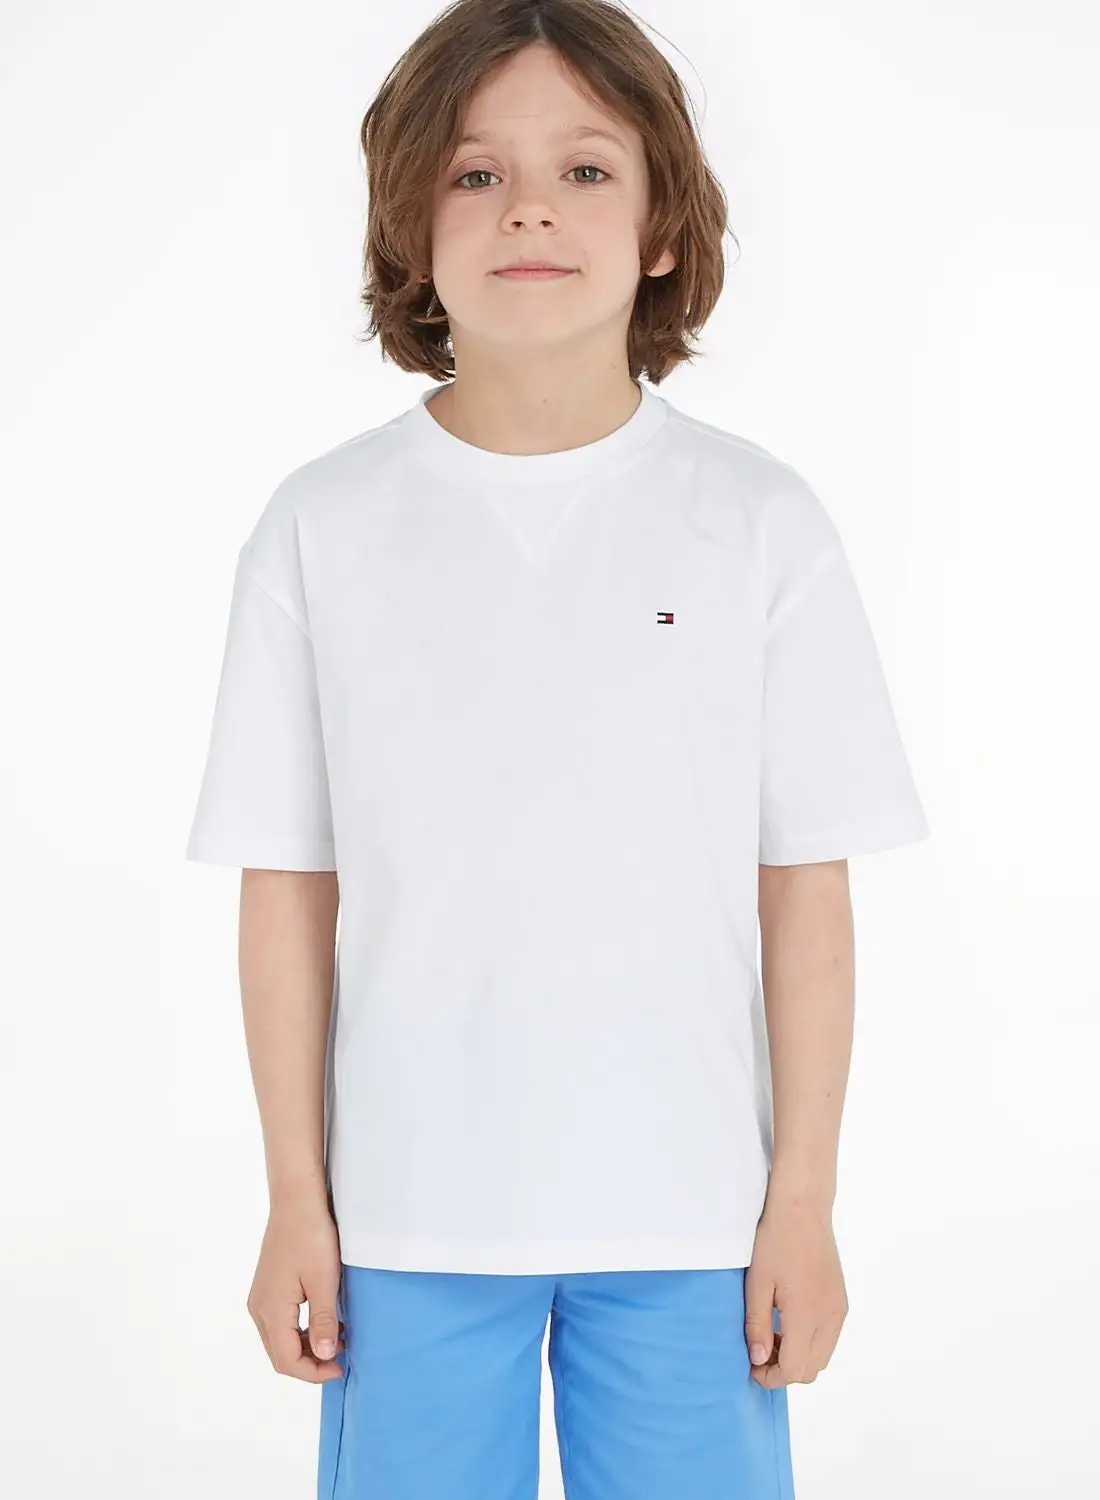 TOMMY HILFIGER Youth Essential T-Shirt